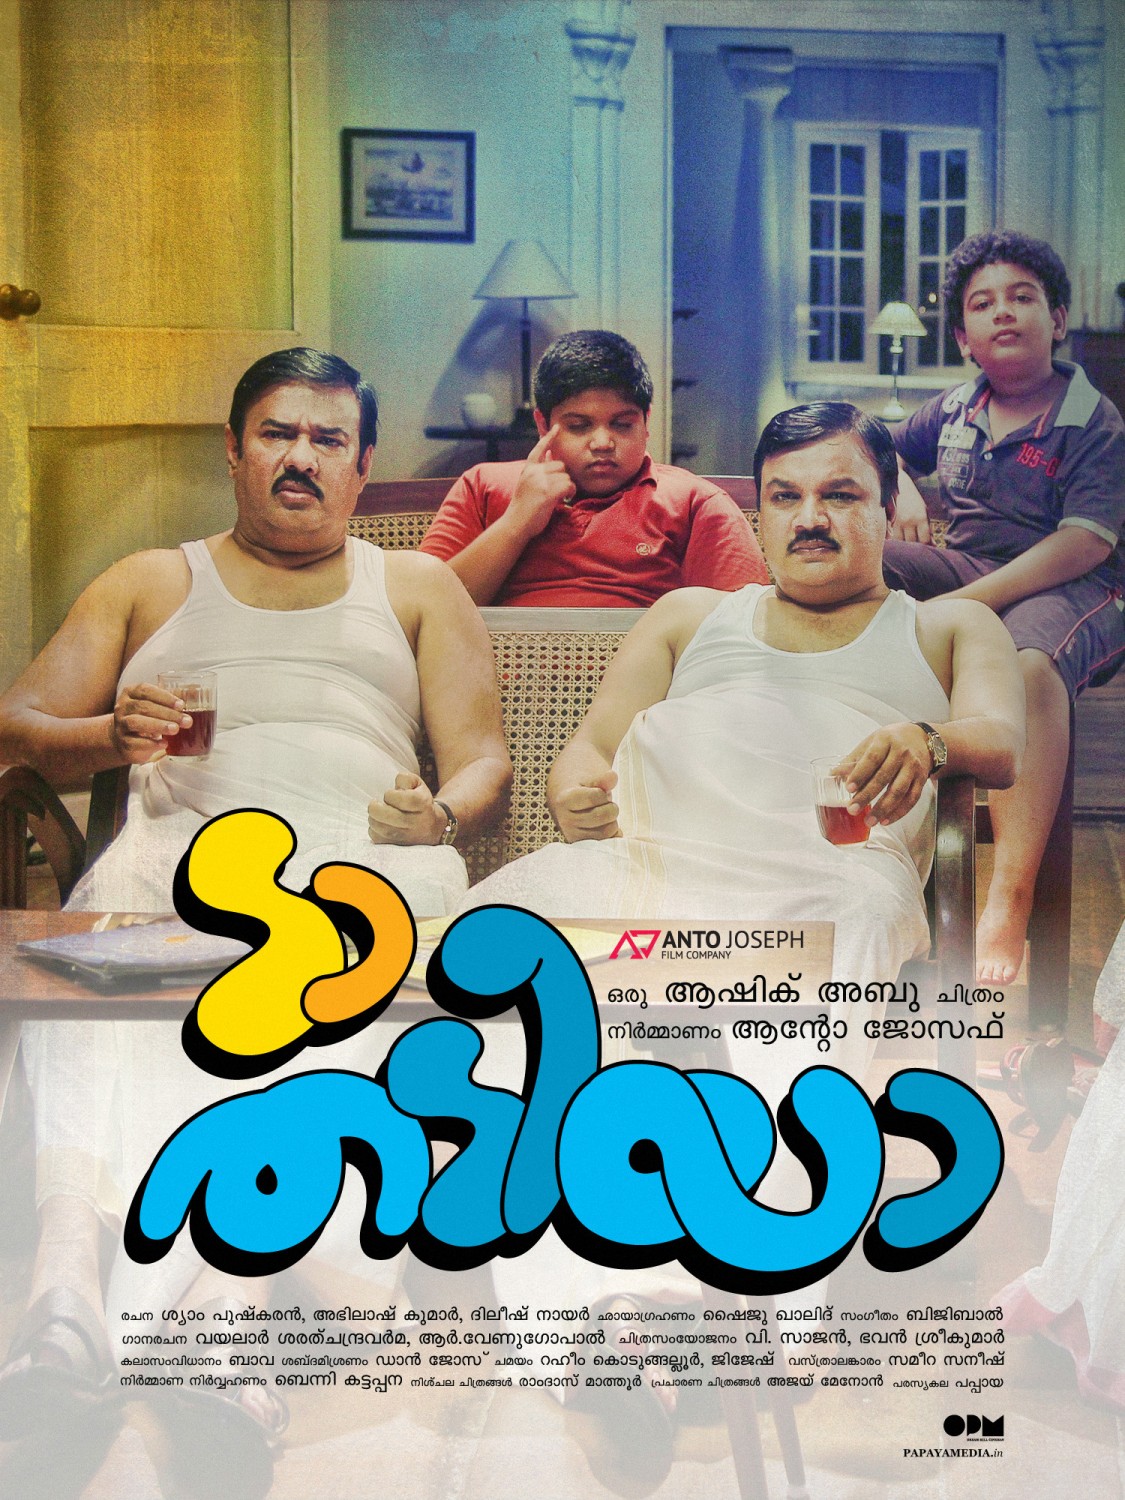 Extra Large Movie Poster Image for Da Thadiya (#43 of 50)